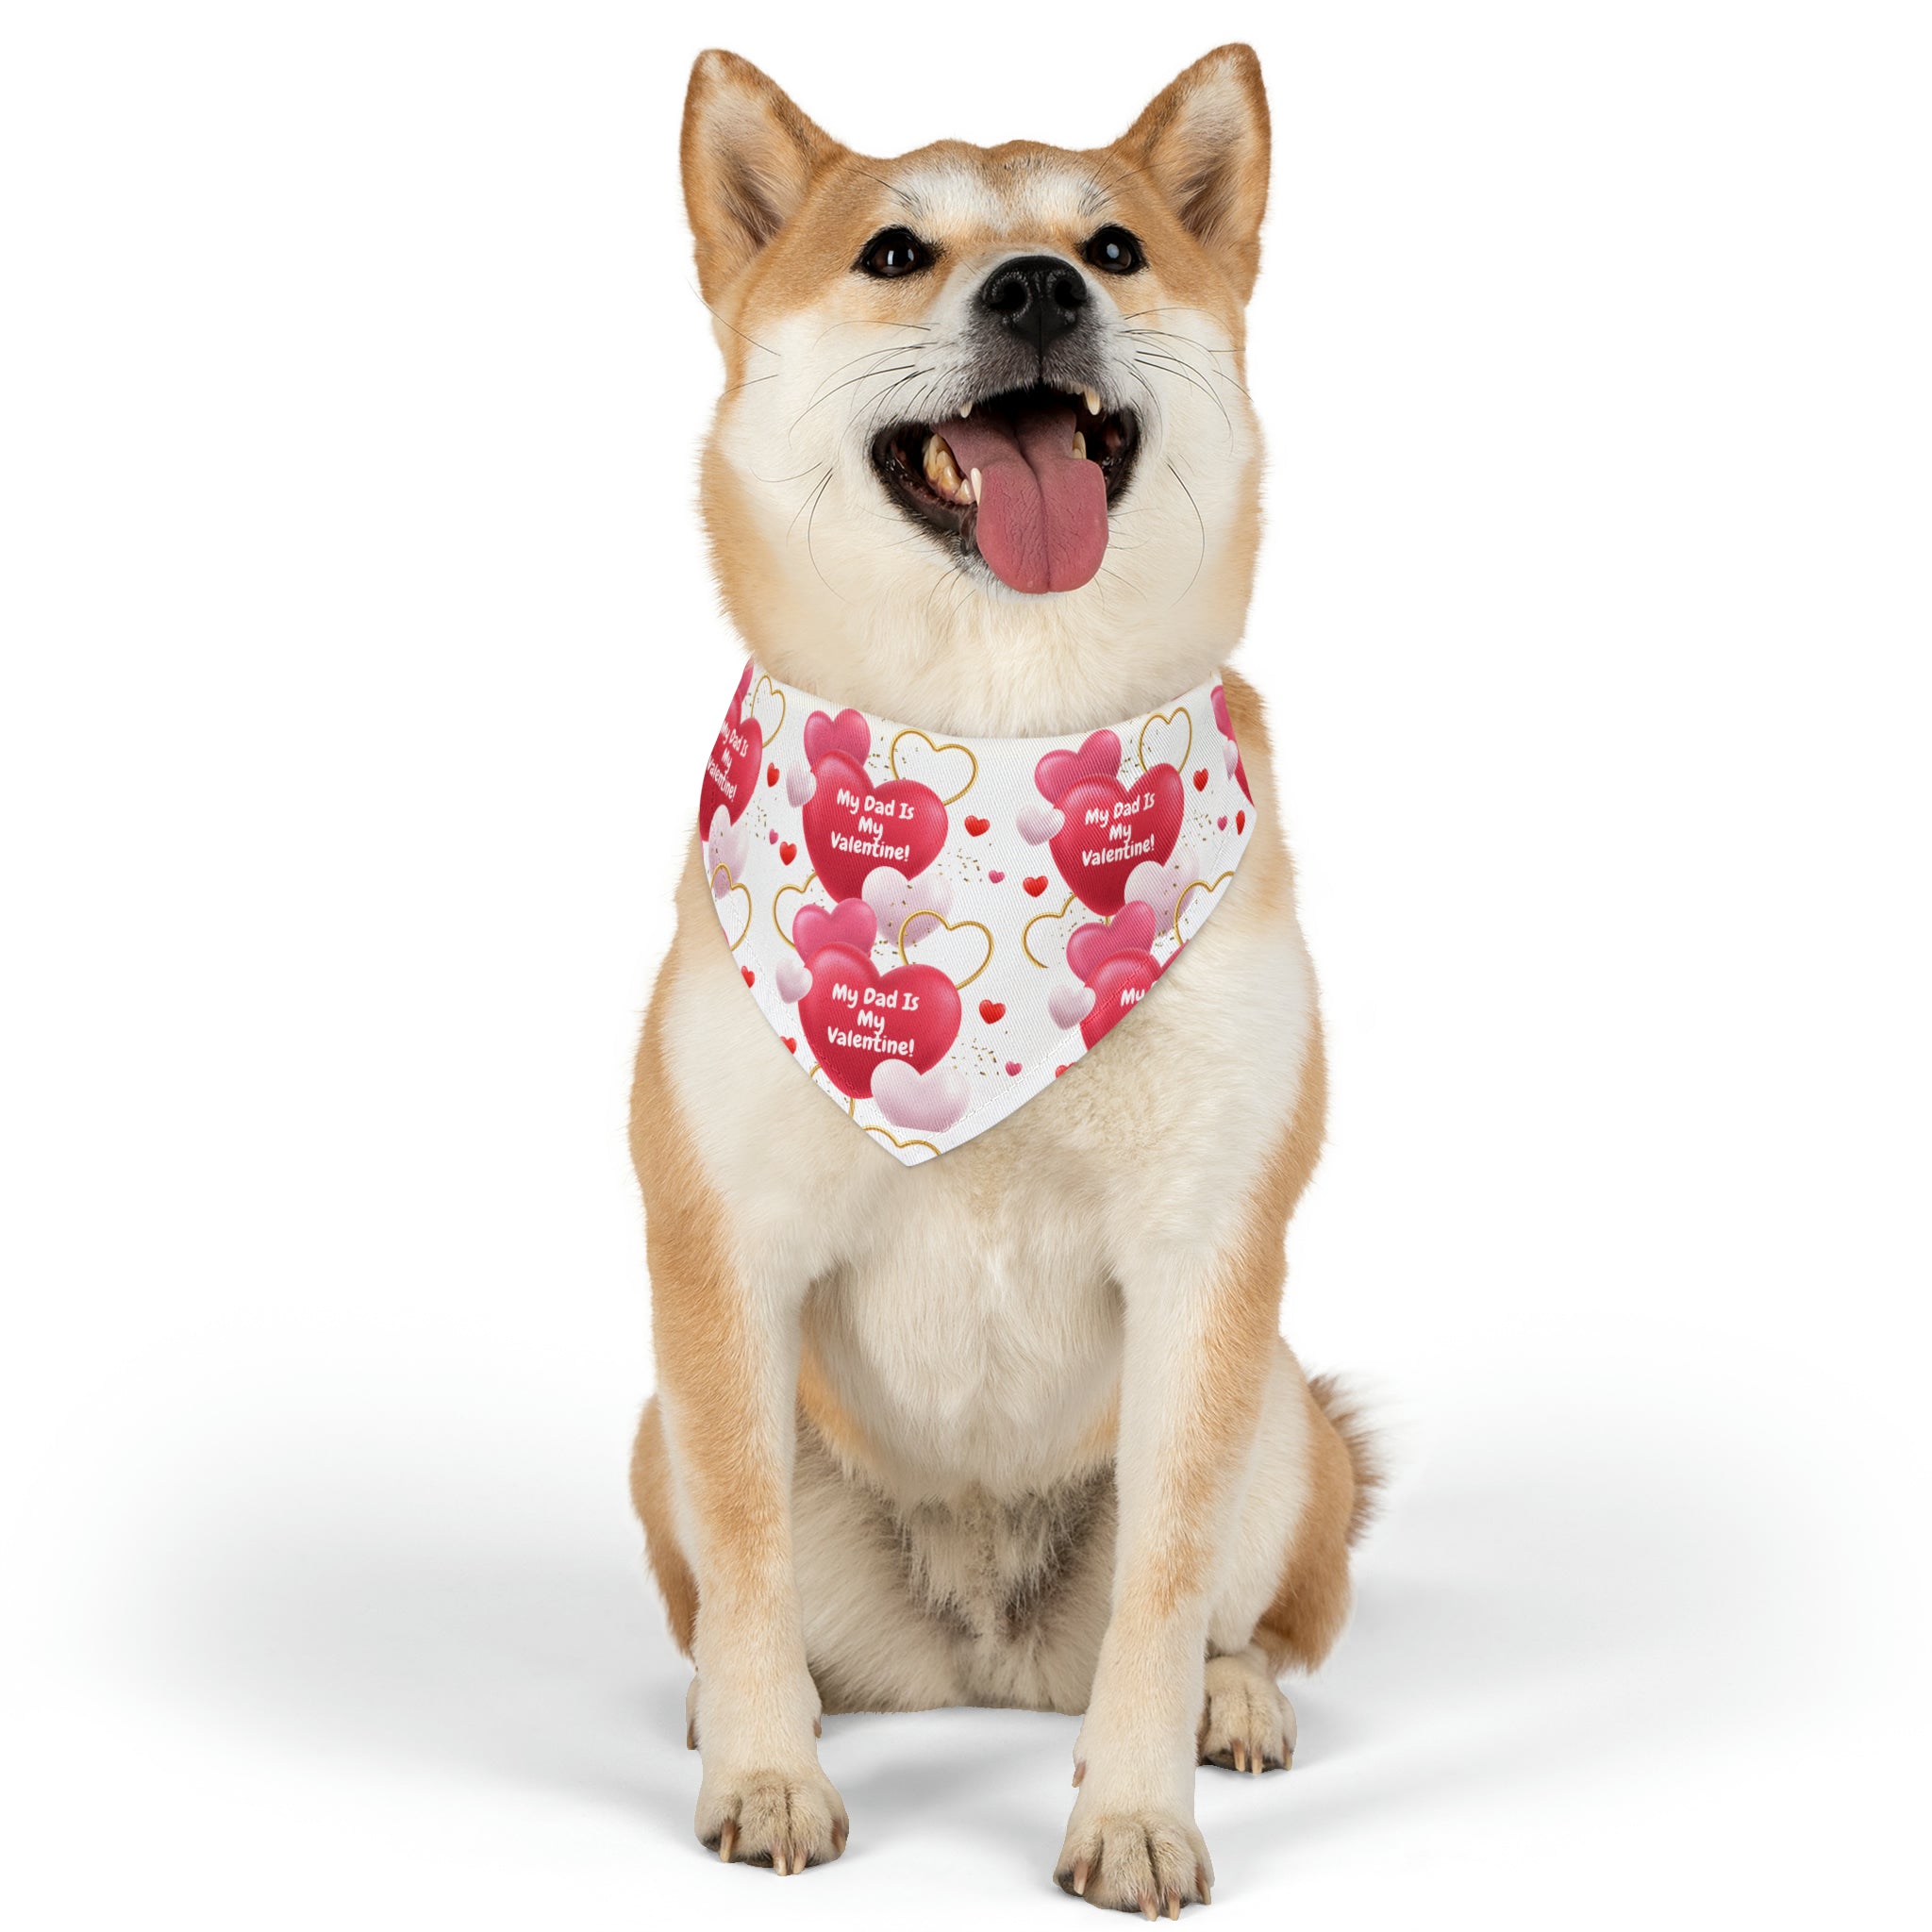 My Dad is My Valentine" - Adorable Valentine's Day Dog Bandana